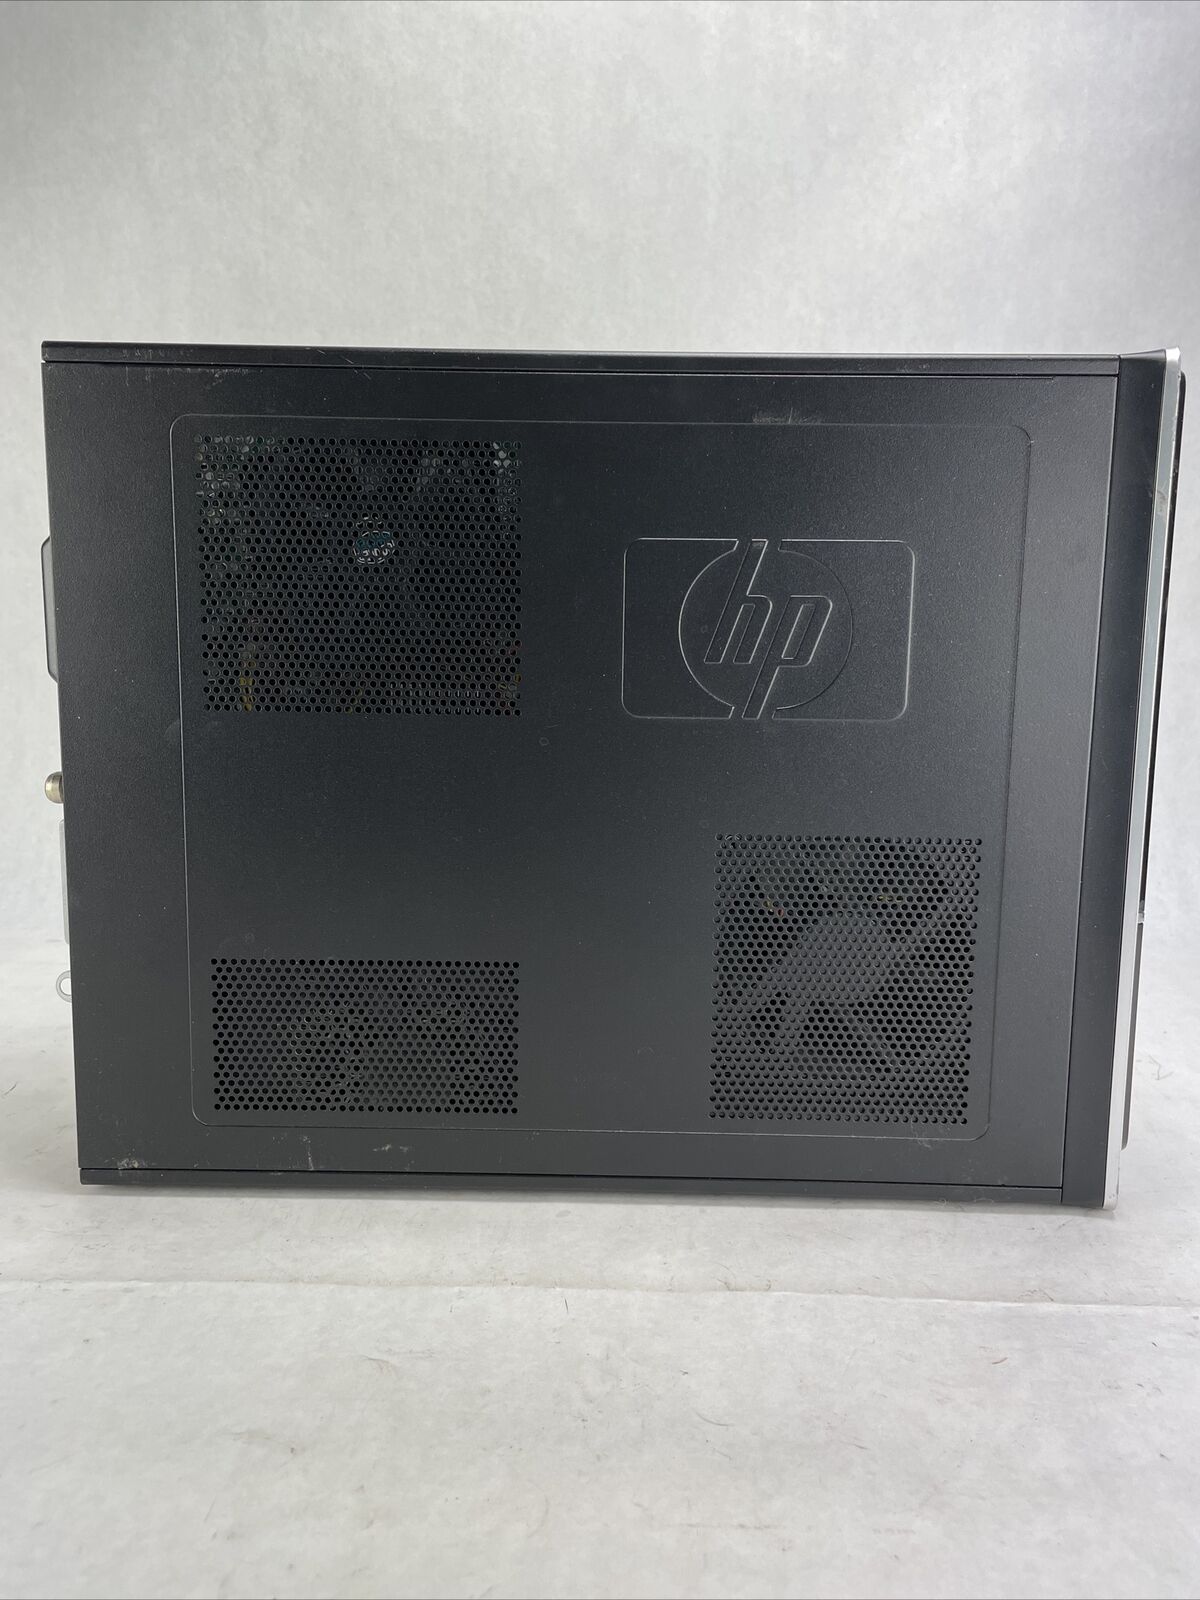 HP 55117C SFF Intel Pentium Dual-Core E5300 2.6GHz 4GB RAM No HDD No OS